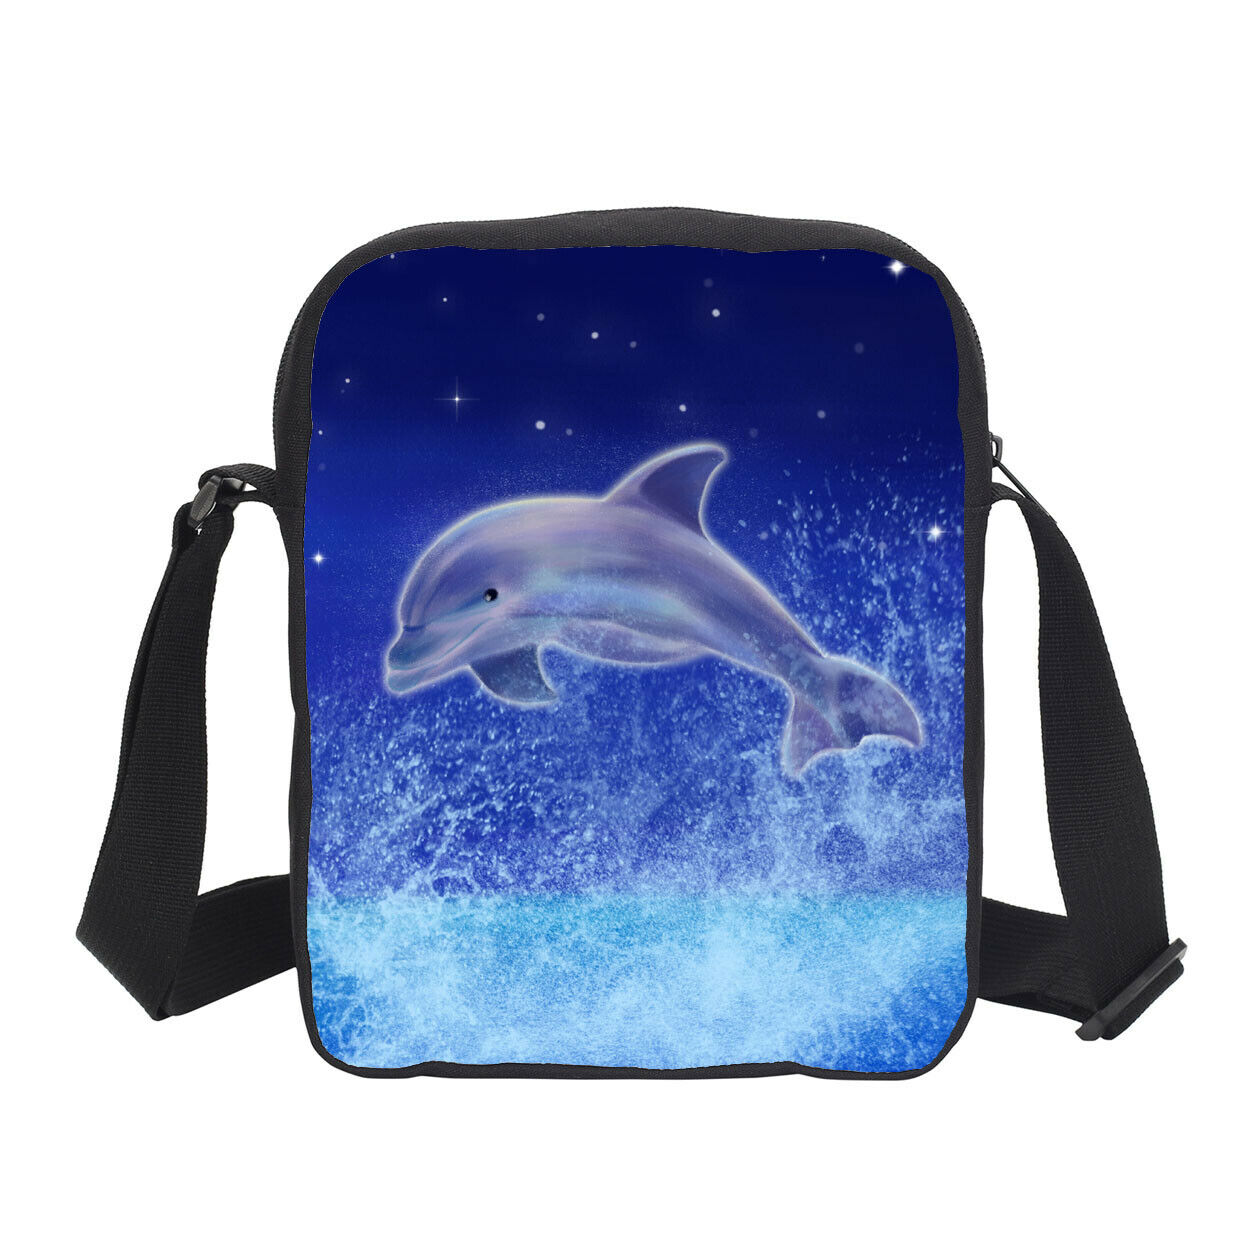 Sunset Underwater Dolphin Zipper Laptop Sleeve Bag Sunset Underwater Dolphin Carring Case Cover Protector Handbag 17 Inch for Notebook 